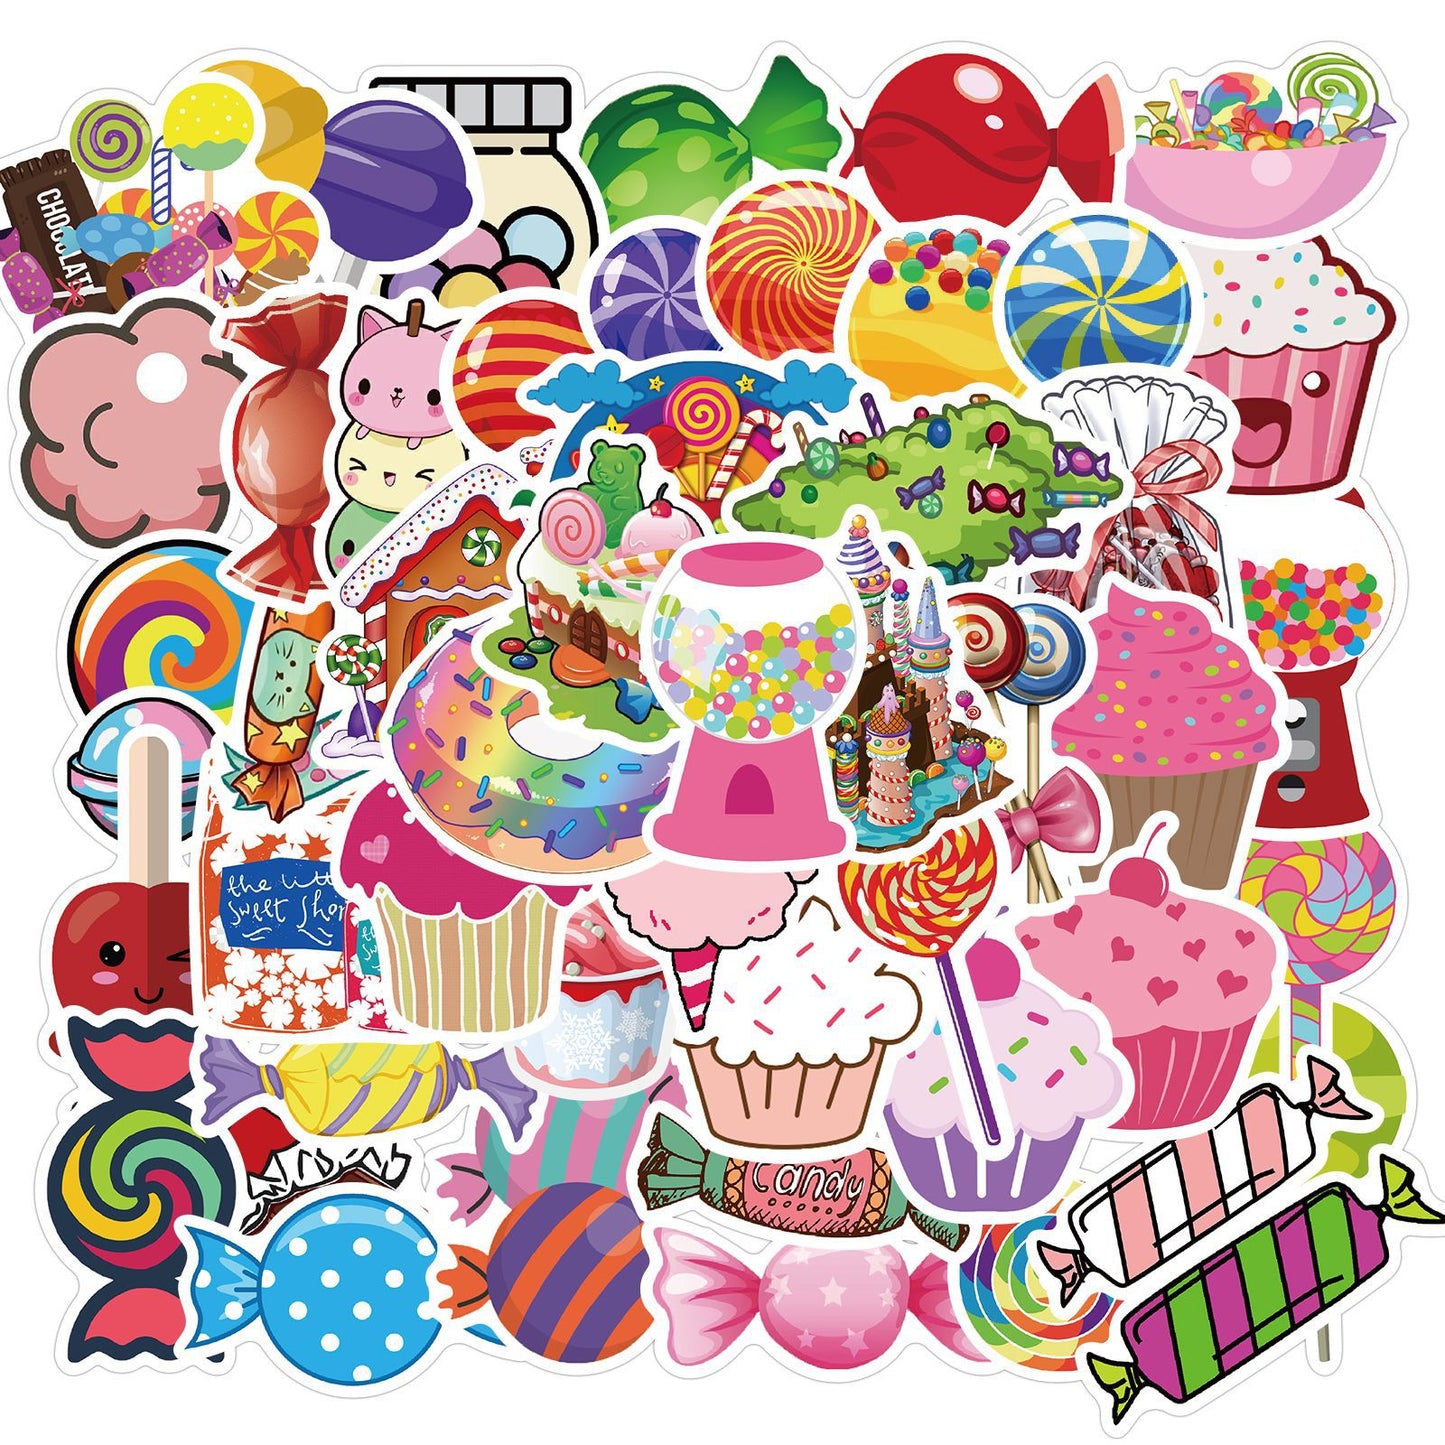 50 Colorful Candy Graffiti Stickers